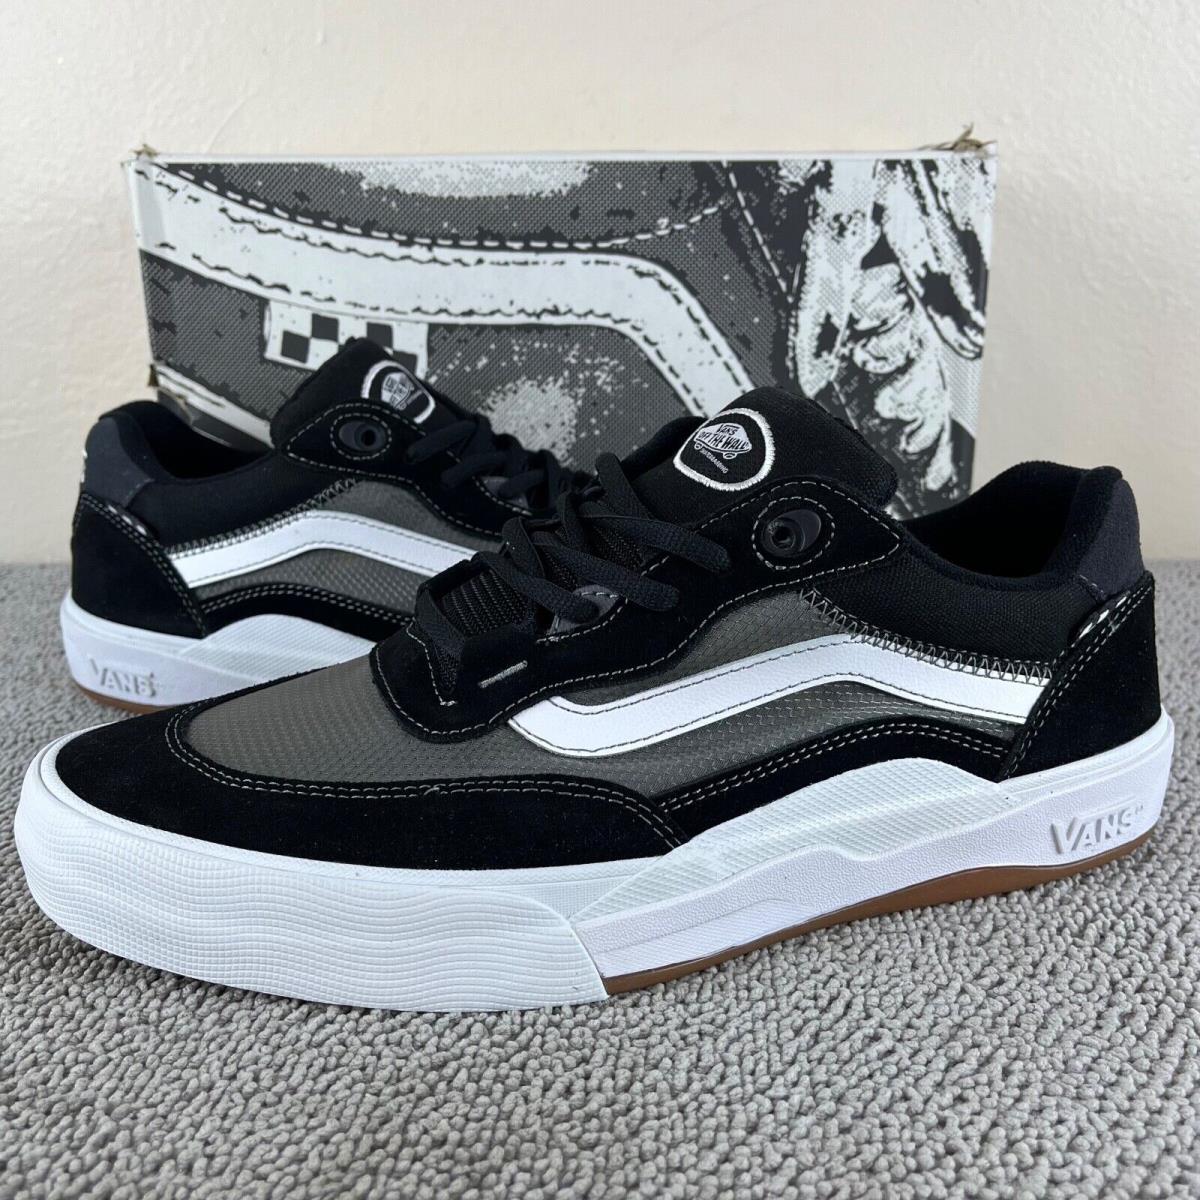 Vans Wayvee Black White Popcush Skate Shoes Sneakers Men`s Size 11.5